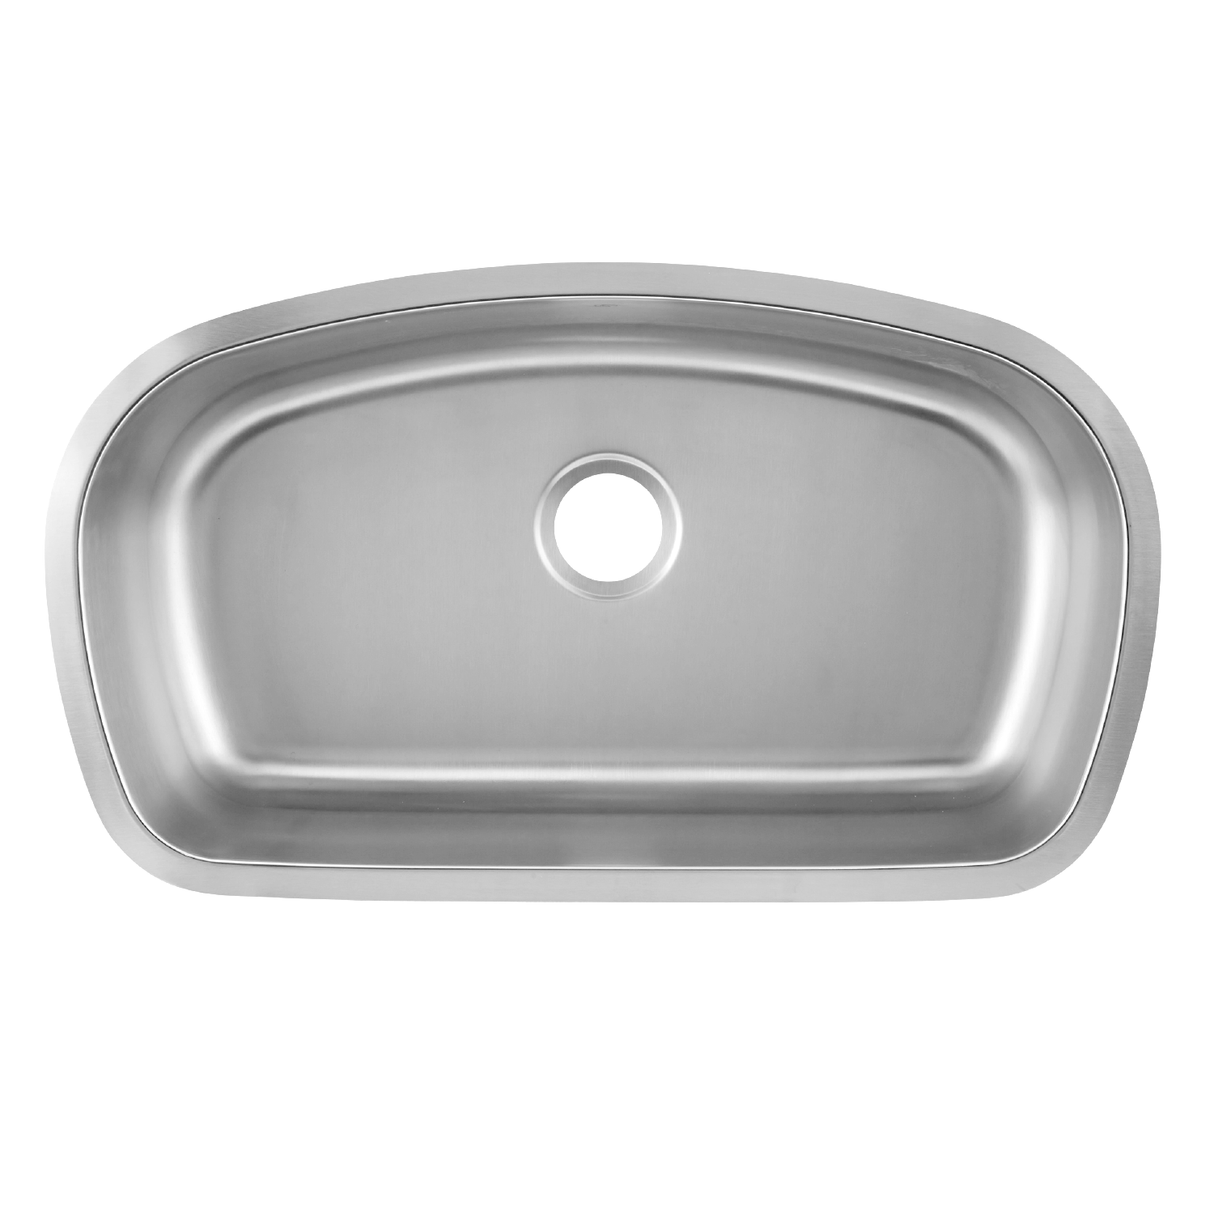 DAX Stainless Steel Single Bowl Undermount Kitchen Sink, Brushed Stainless Steel DAX-3319